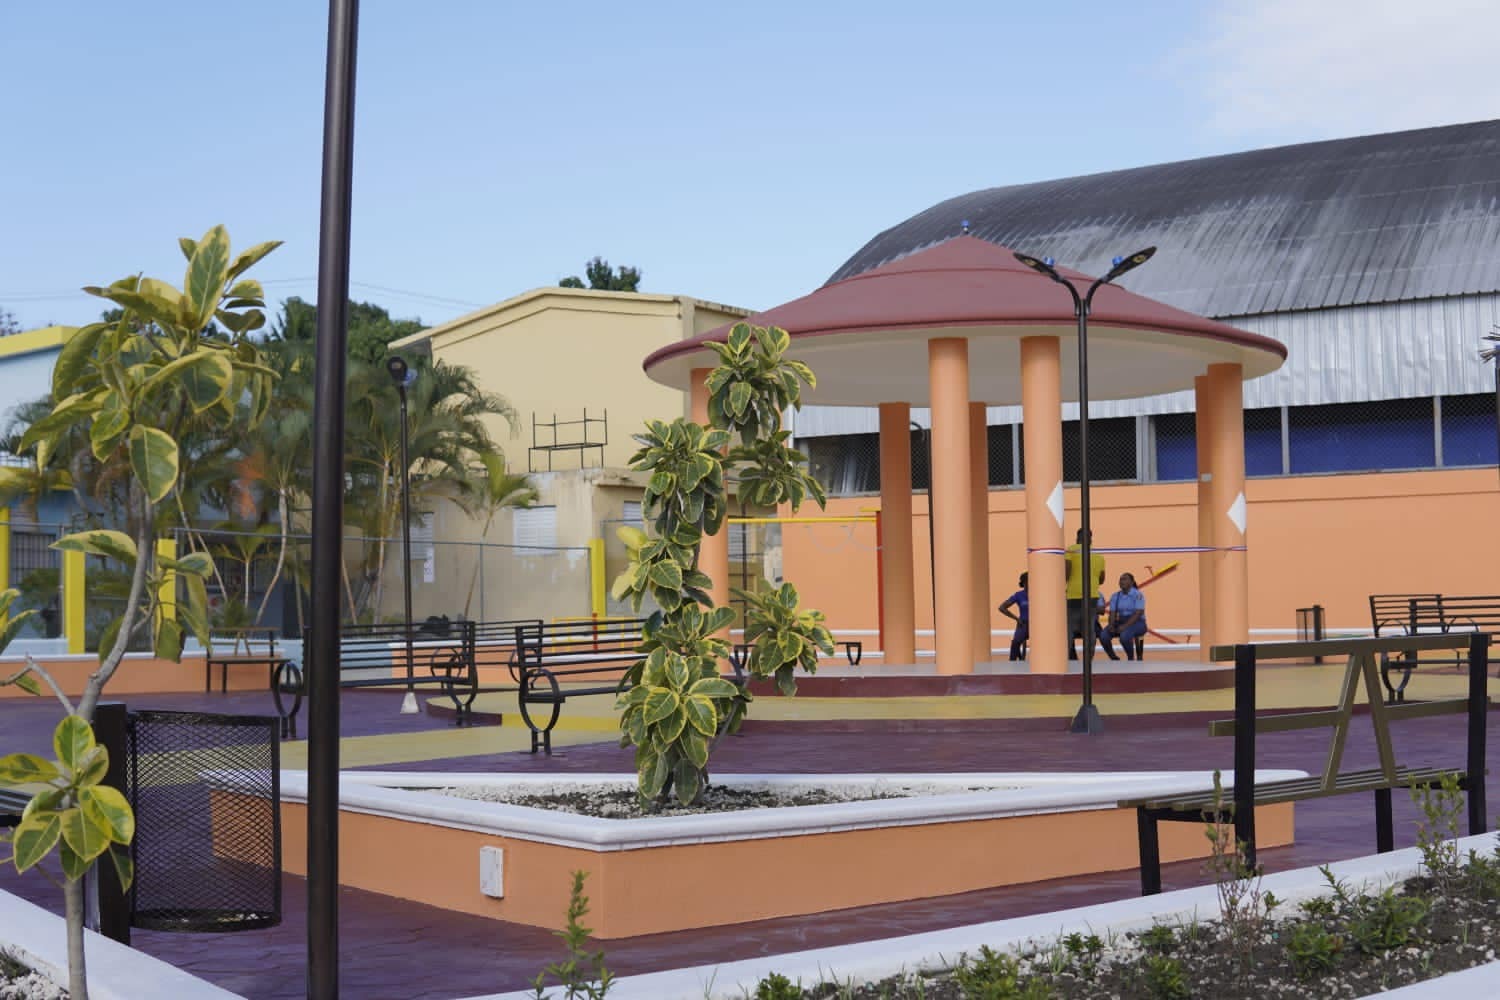 Inauguran nuevo parque recreativo e infantil en Yaguate